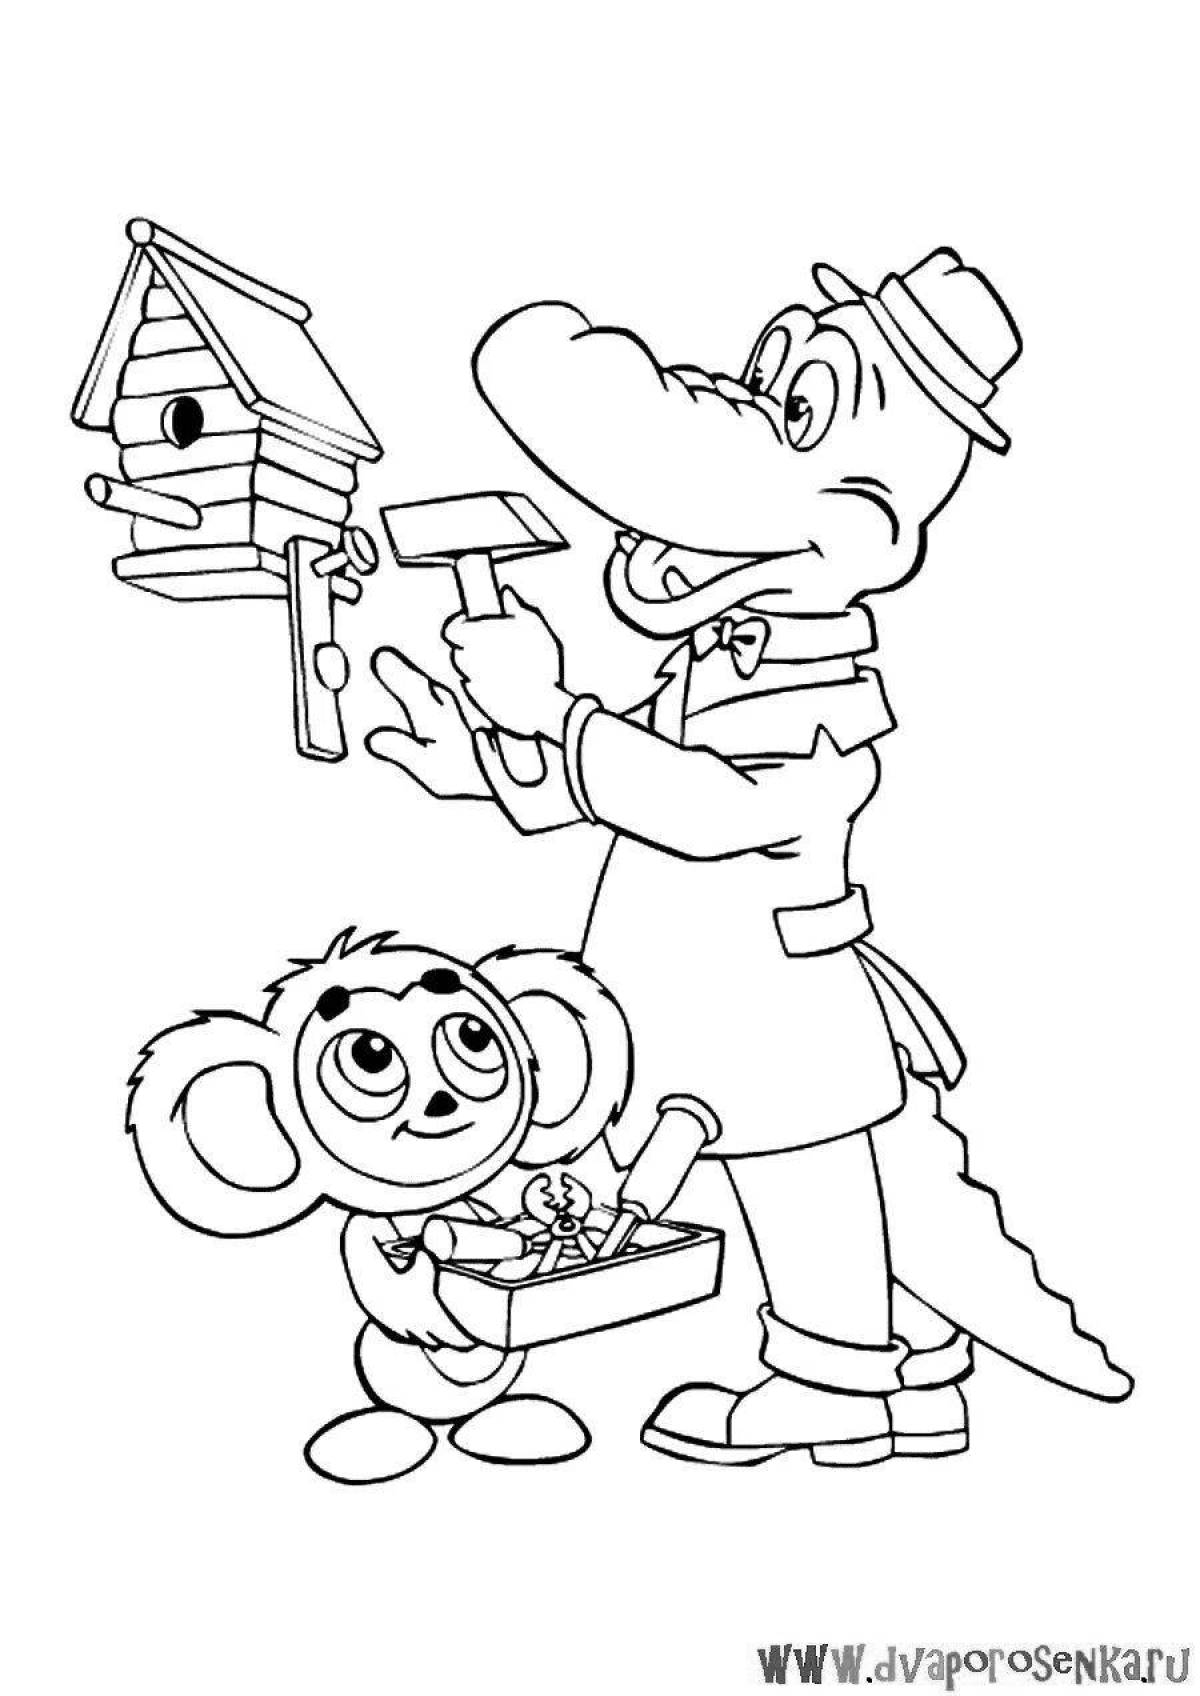 Humorous cheburashka coloring book